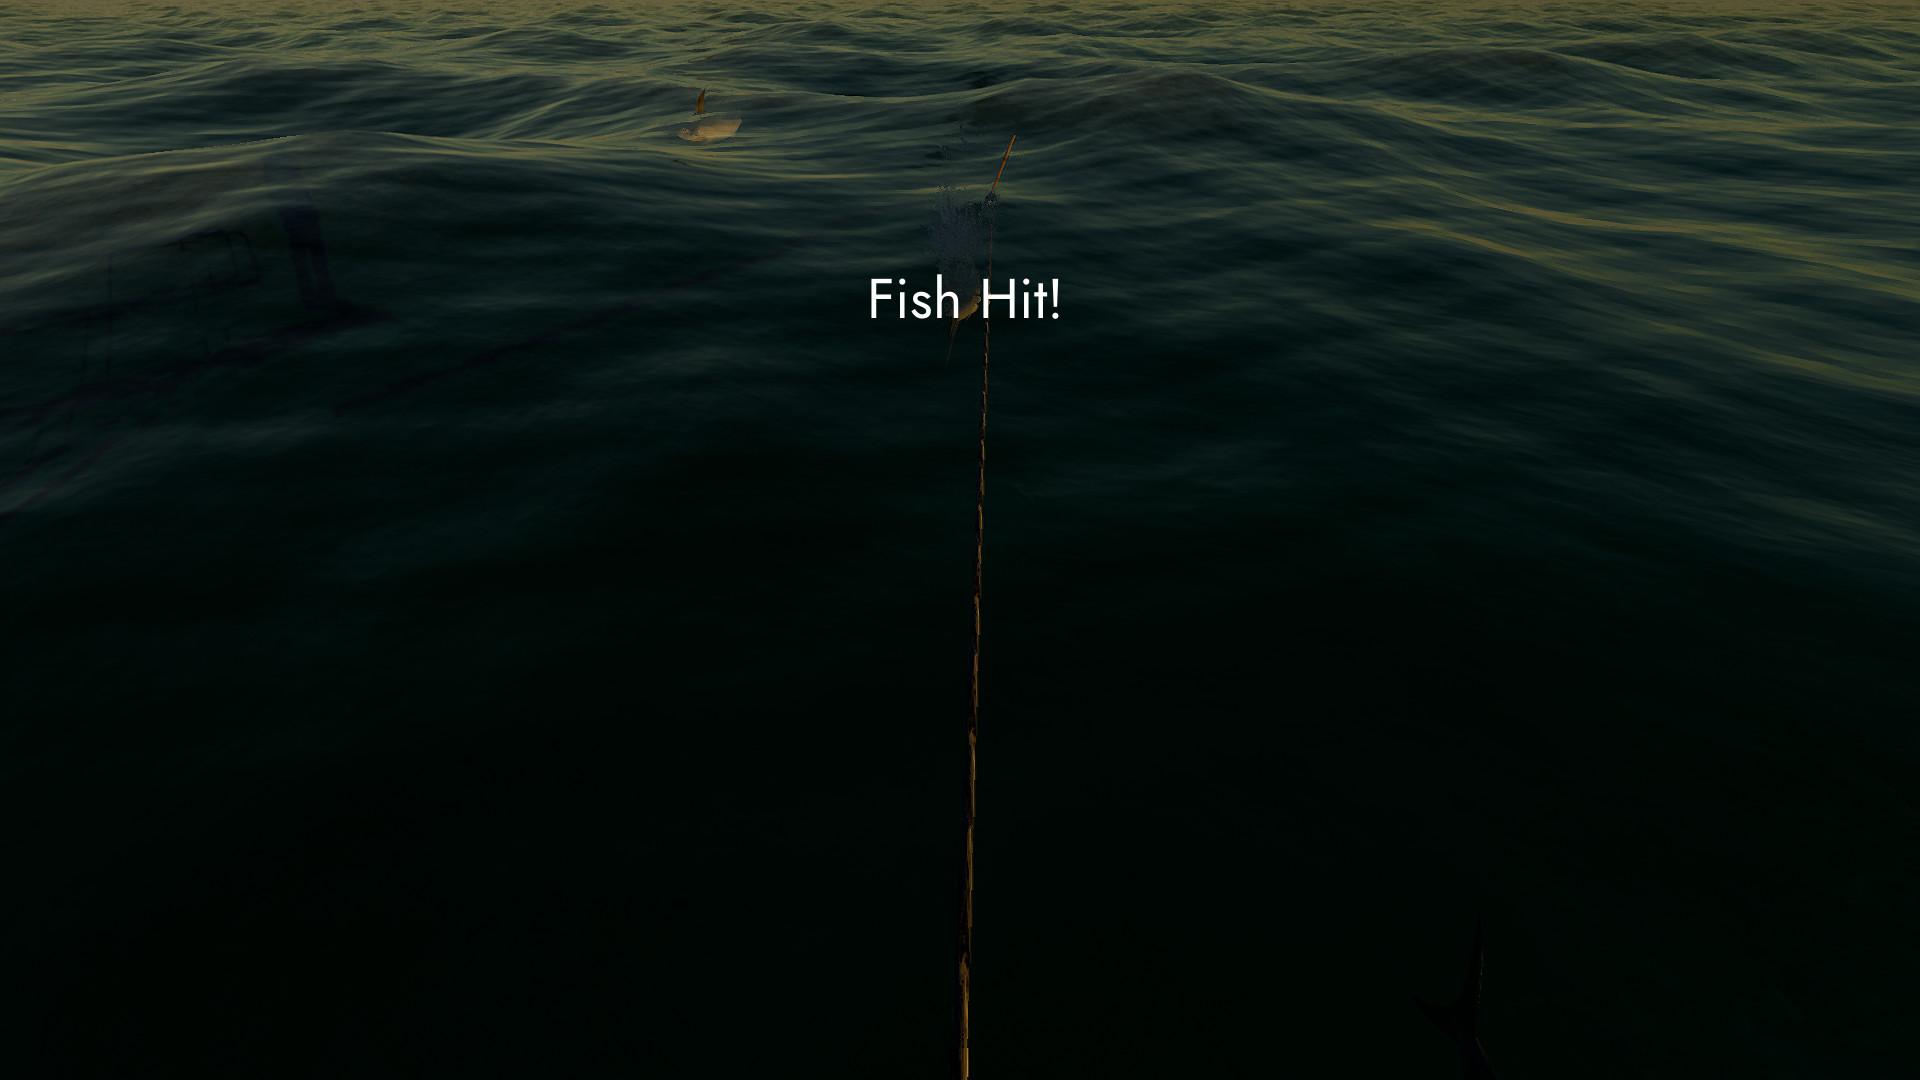 Screenshot №7 from game Fishing: North Atlantic - Enhanced Edition